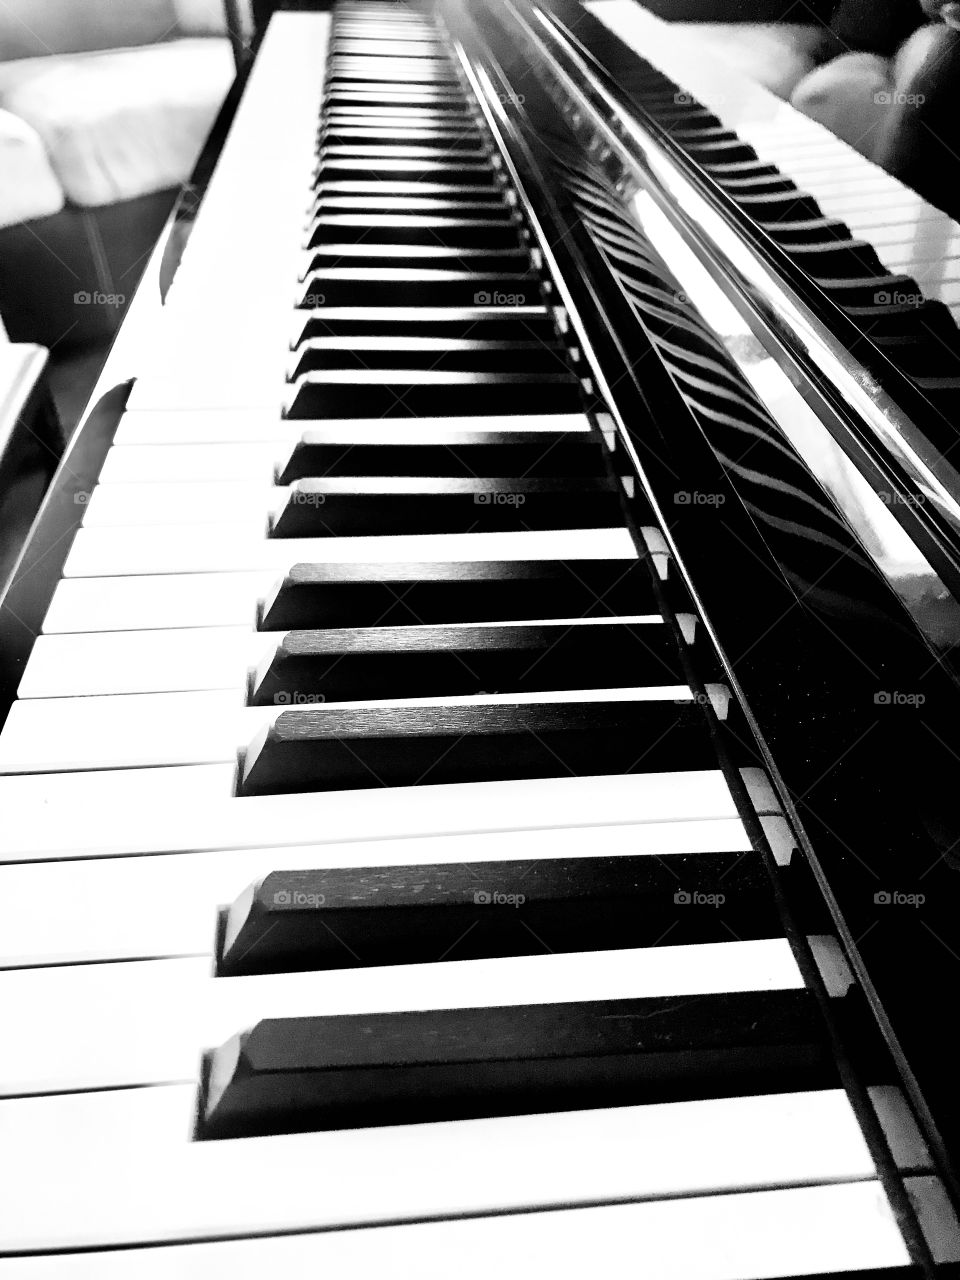 Black and white photo of gorgeous baby grand pianos sleek black and white keys. 